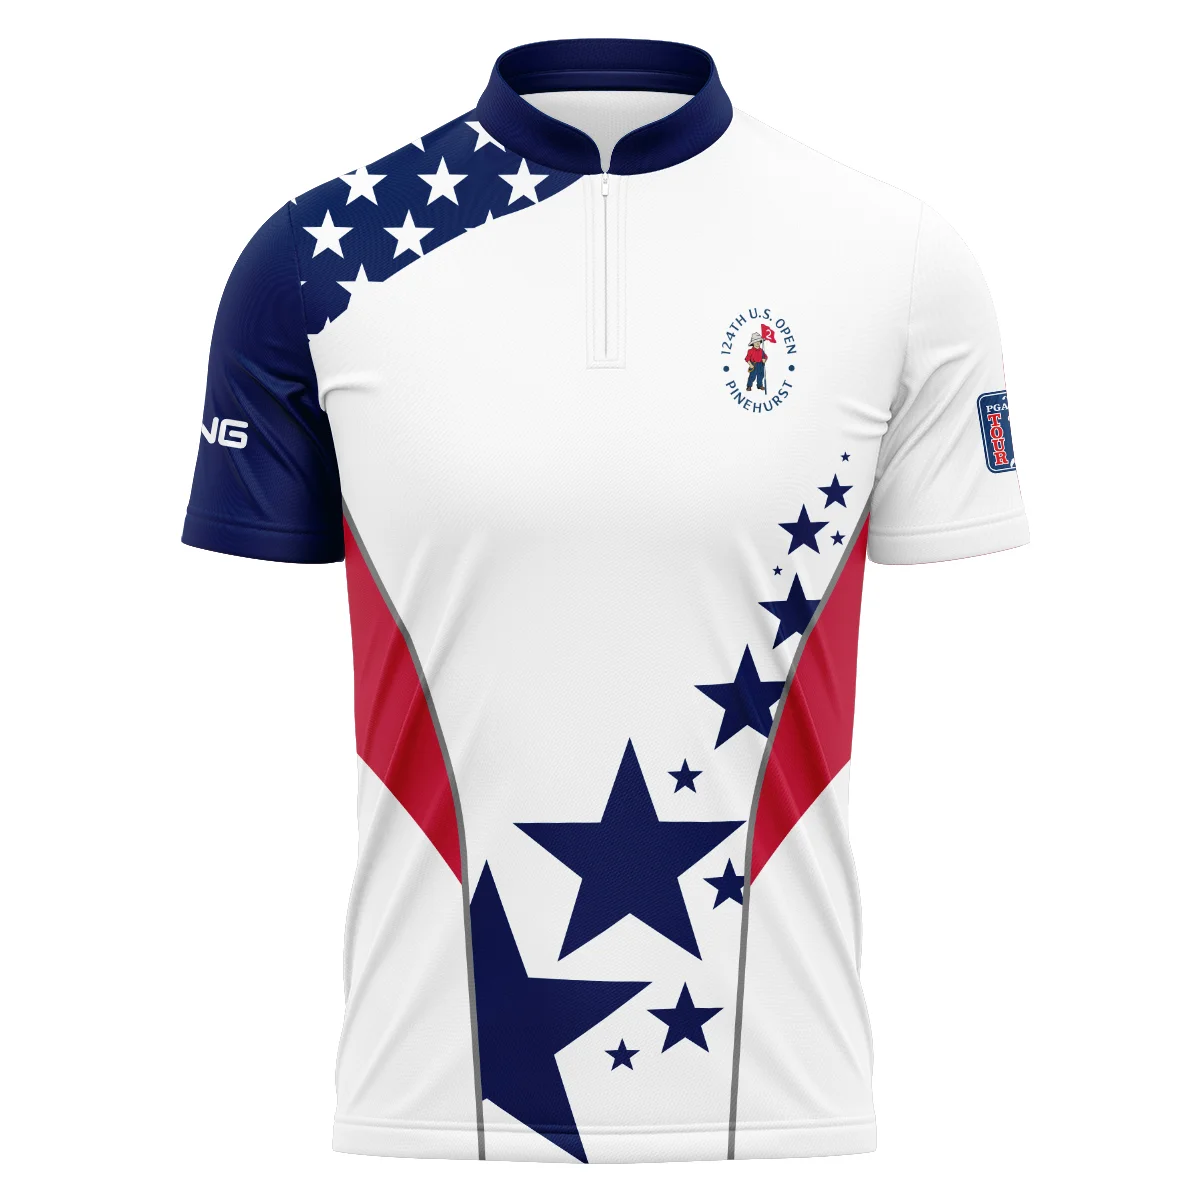 124th U.S. Open Pinehurst Ping Stars US Flag White Blue Unisex T-Shirt Style Classic T-Shirt